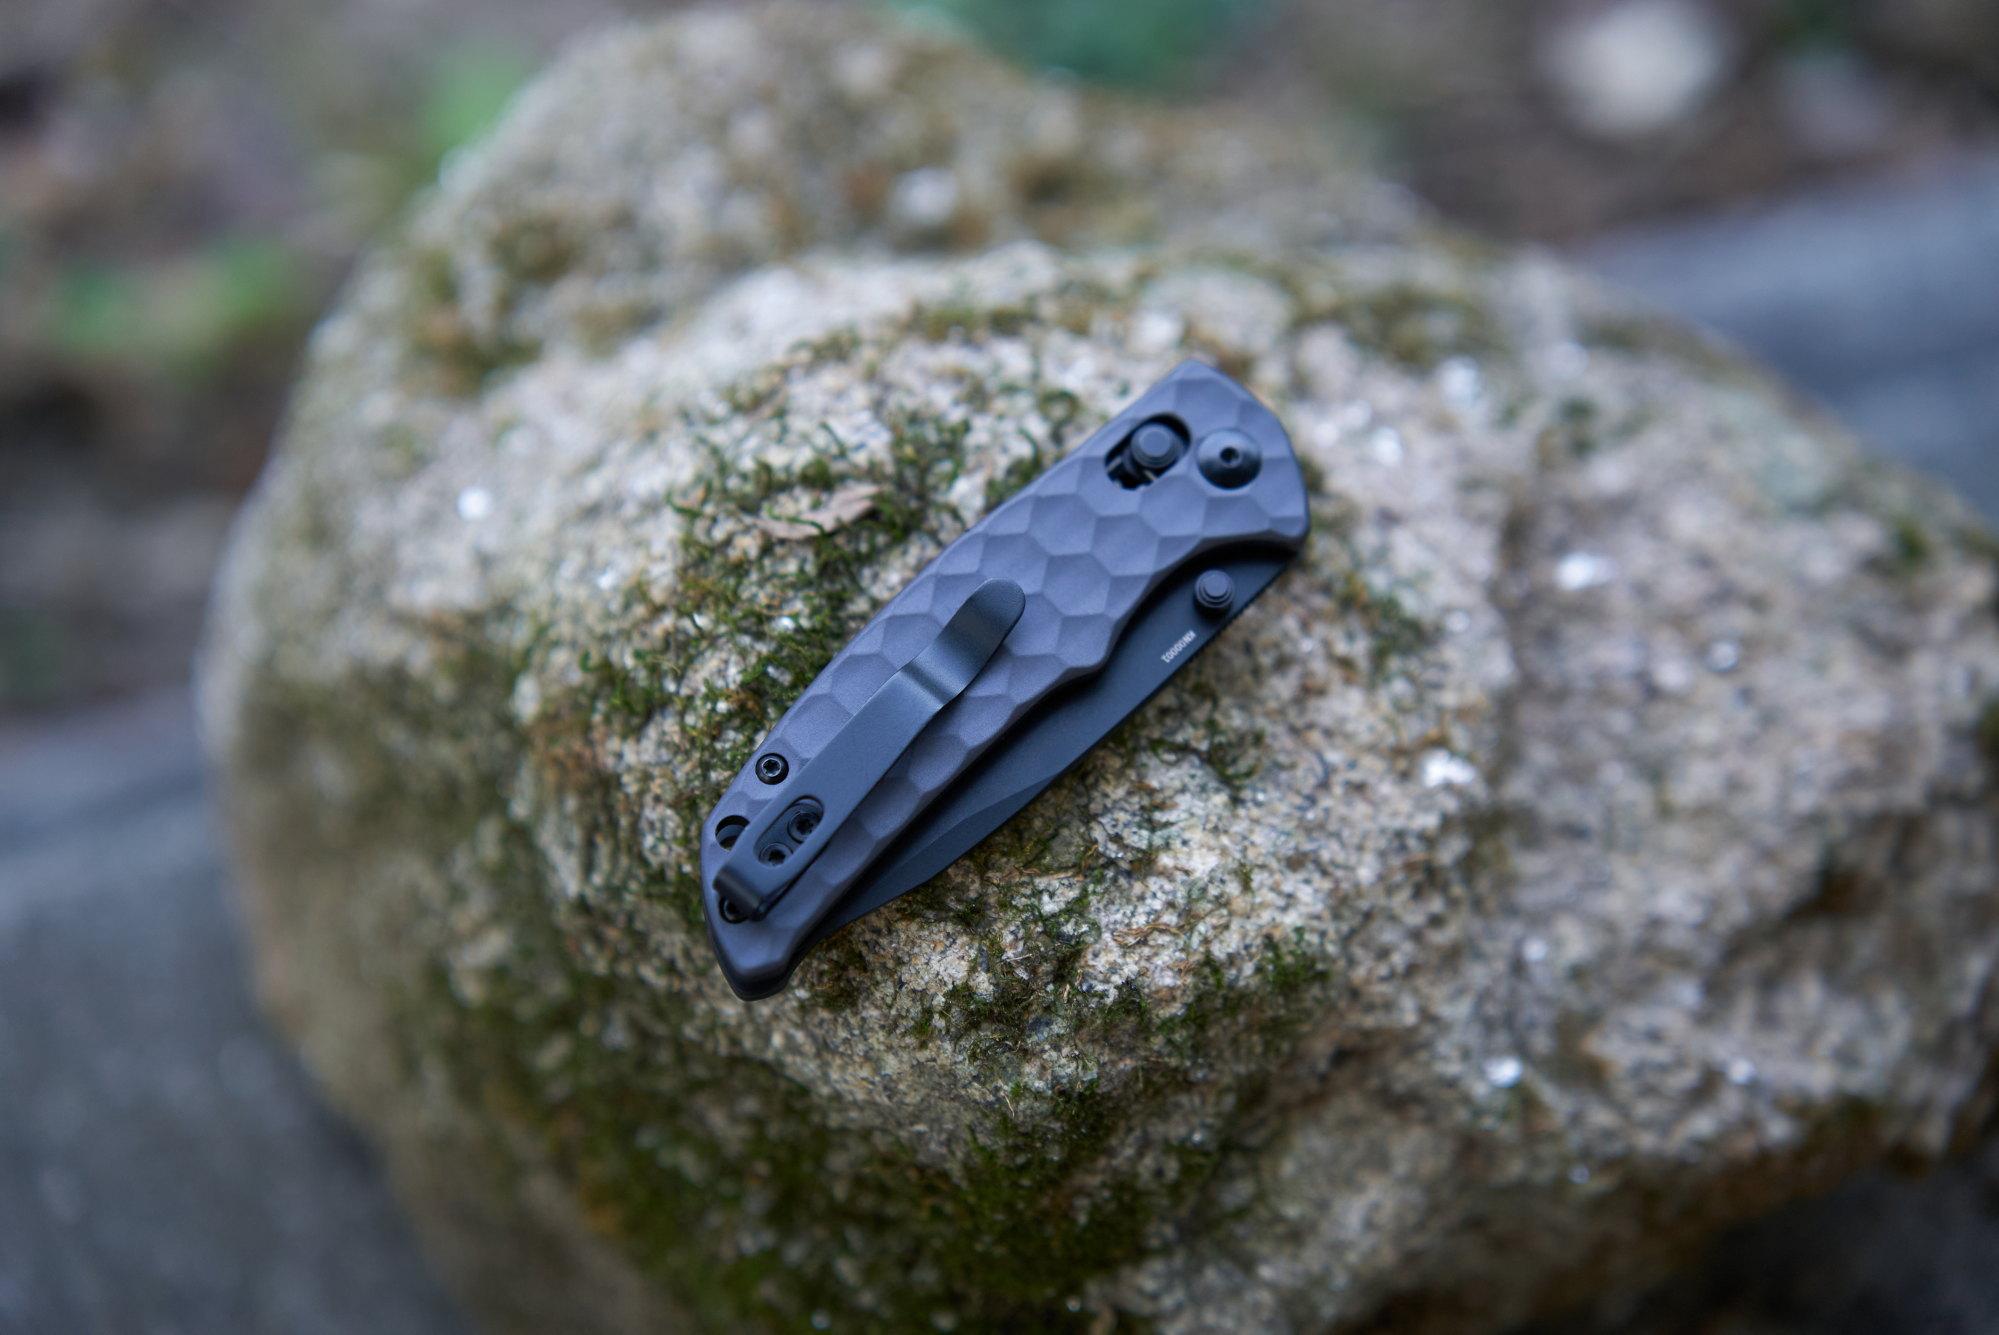 Сгъваем нож Oknife Rubato 3 - Сив 154CM неръждаема стомана с черно титаниево PVD покритие